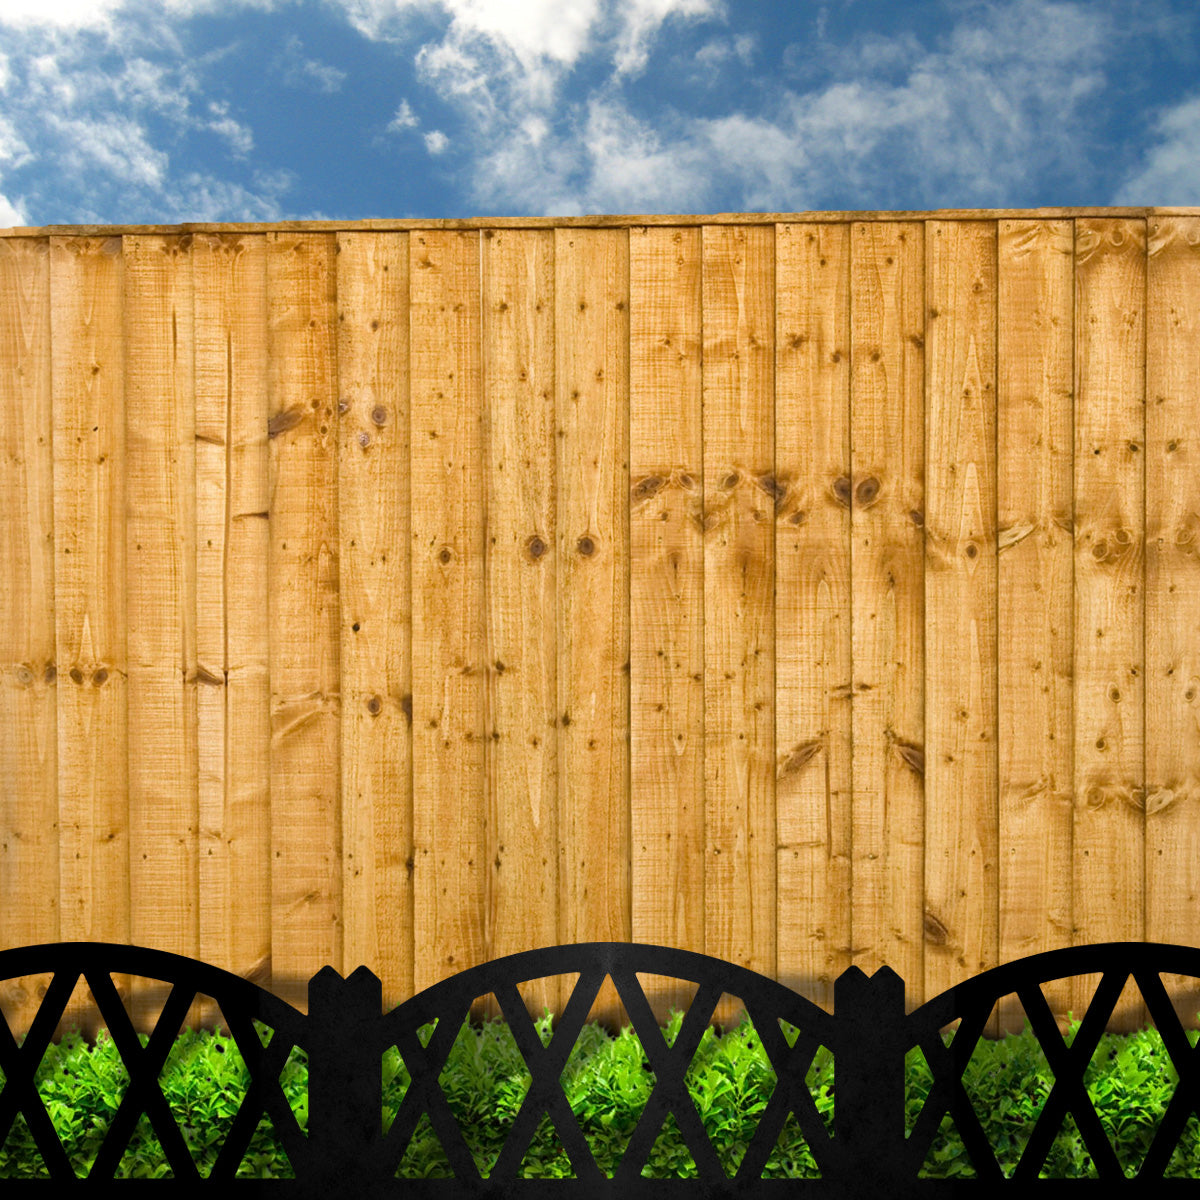 Decorative Edwardian-Style Garden Steel Picket Fence Panels - Indoor Outdoors